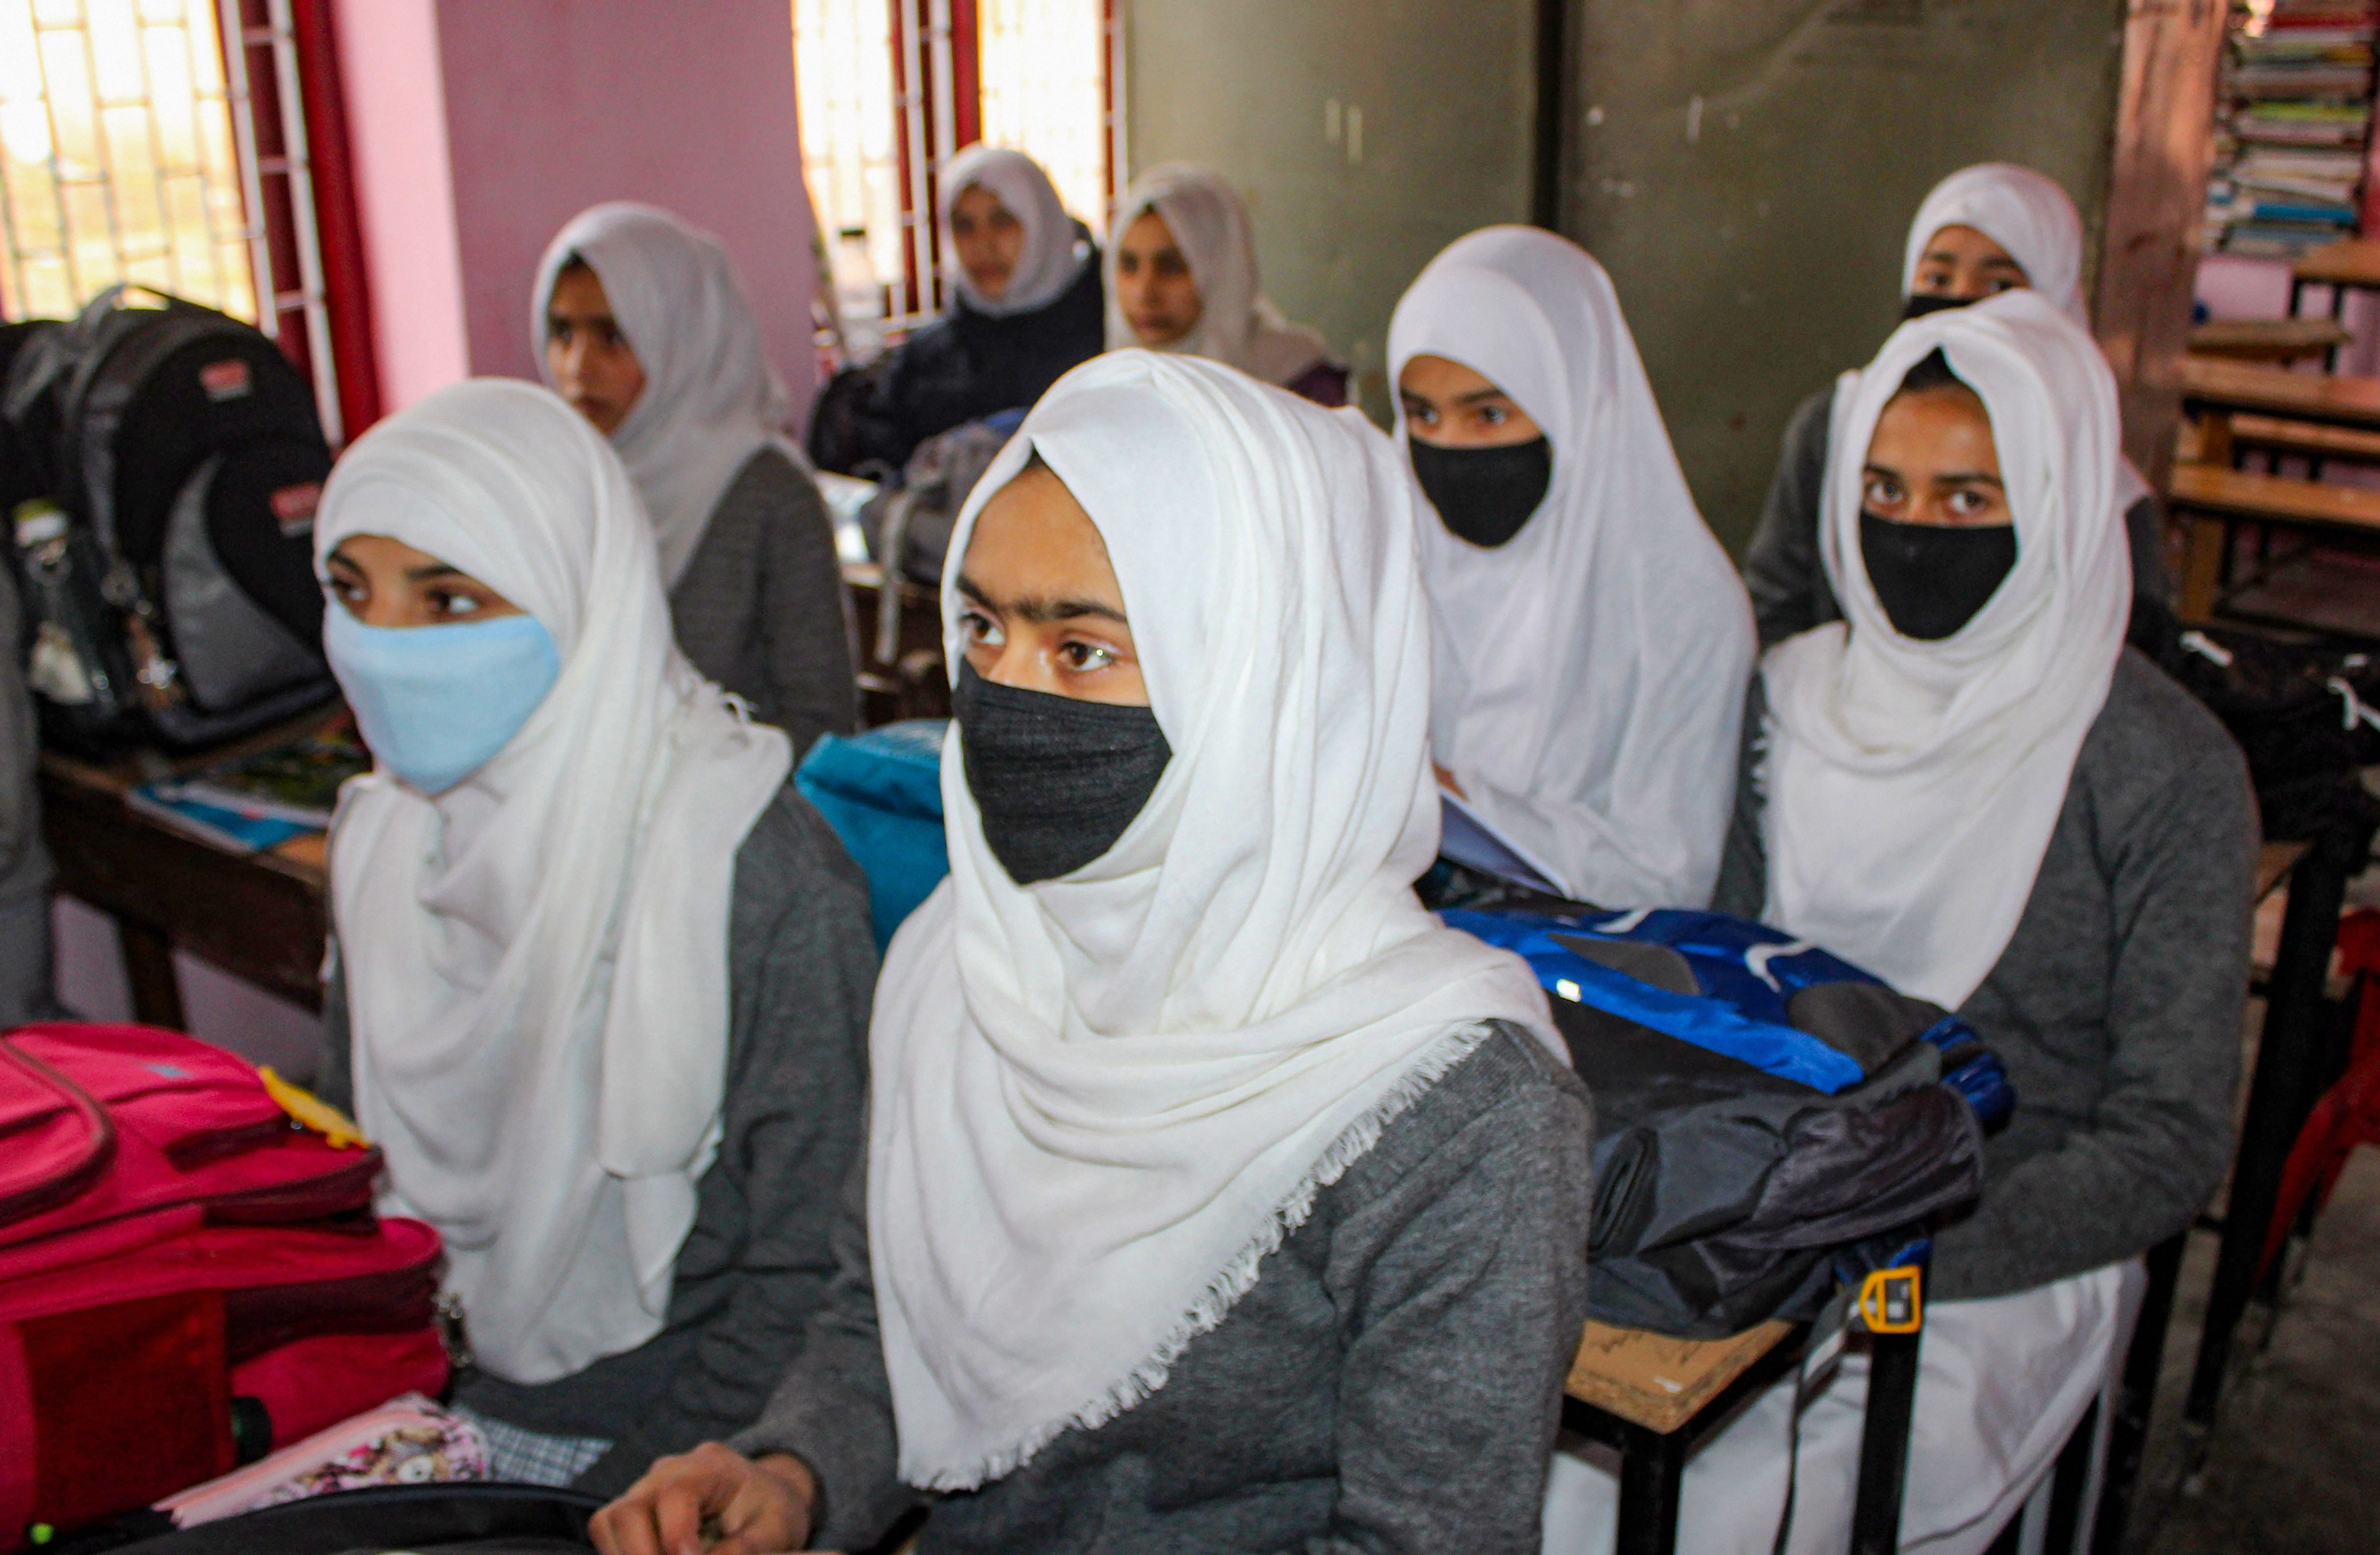 Students wear masks to mitigate the spread of coronavirus, at a school in Srinagar. (PTI Photo)